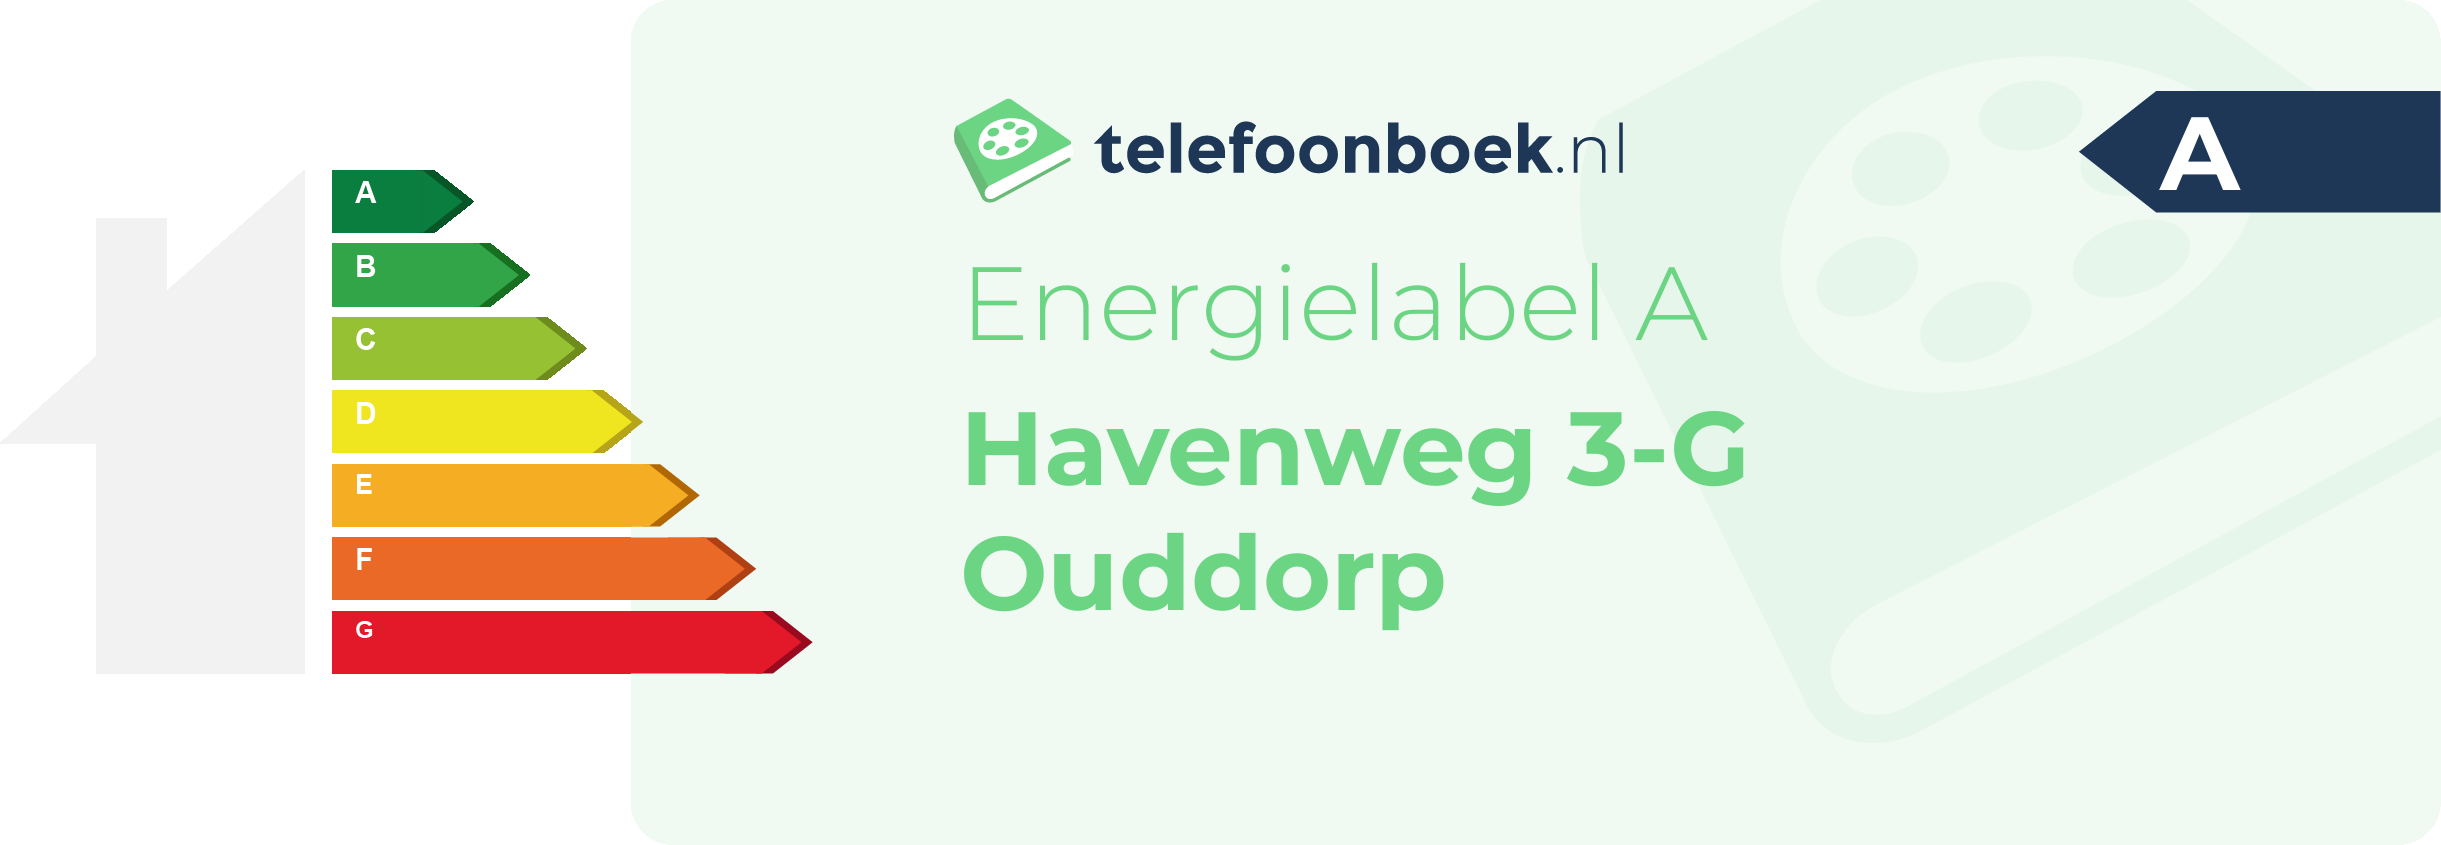 Energielabel Havenweg 3-G Ouddorp